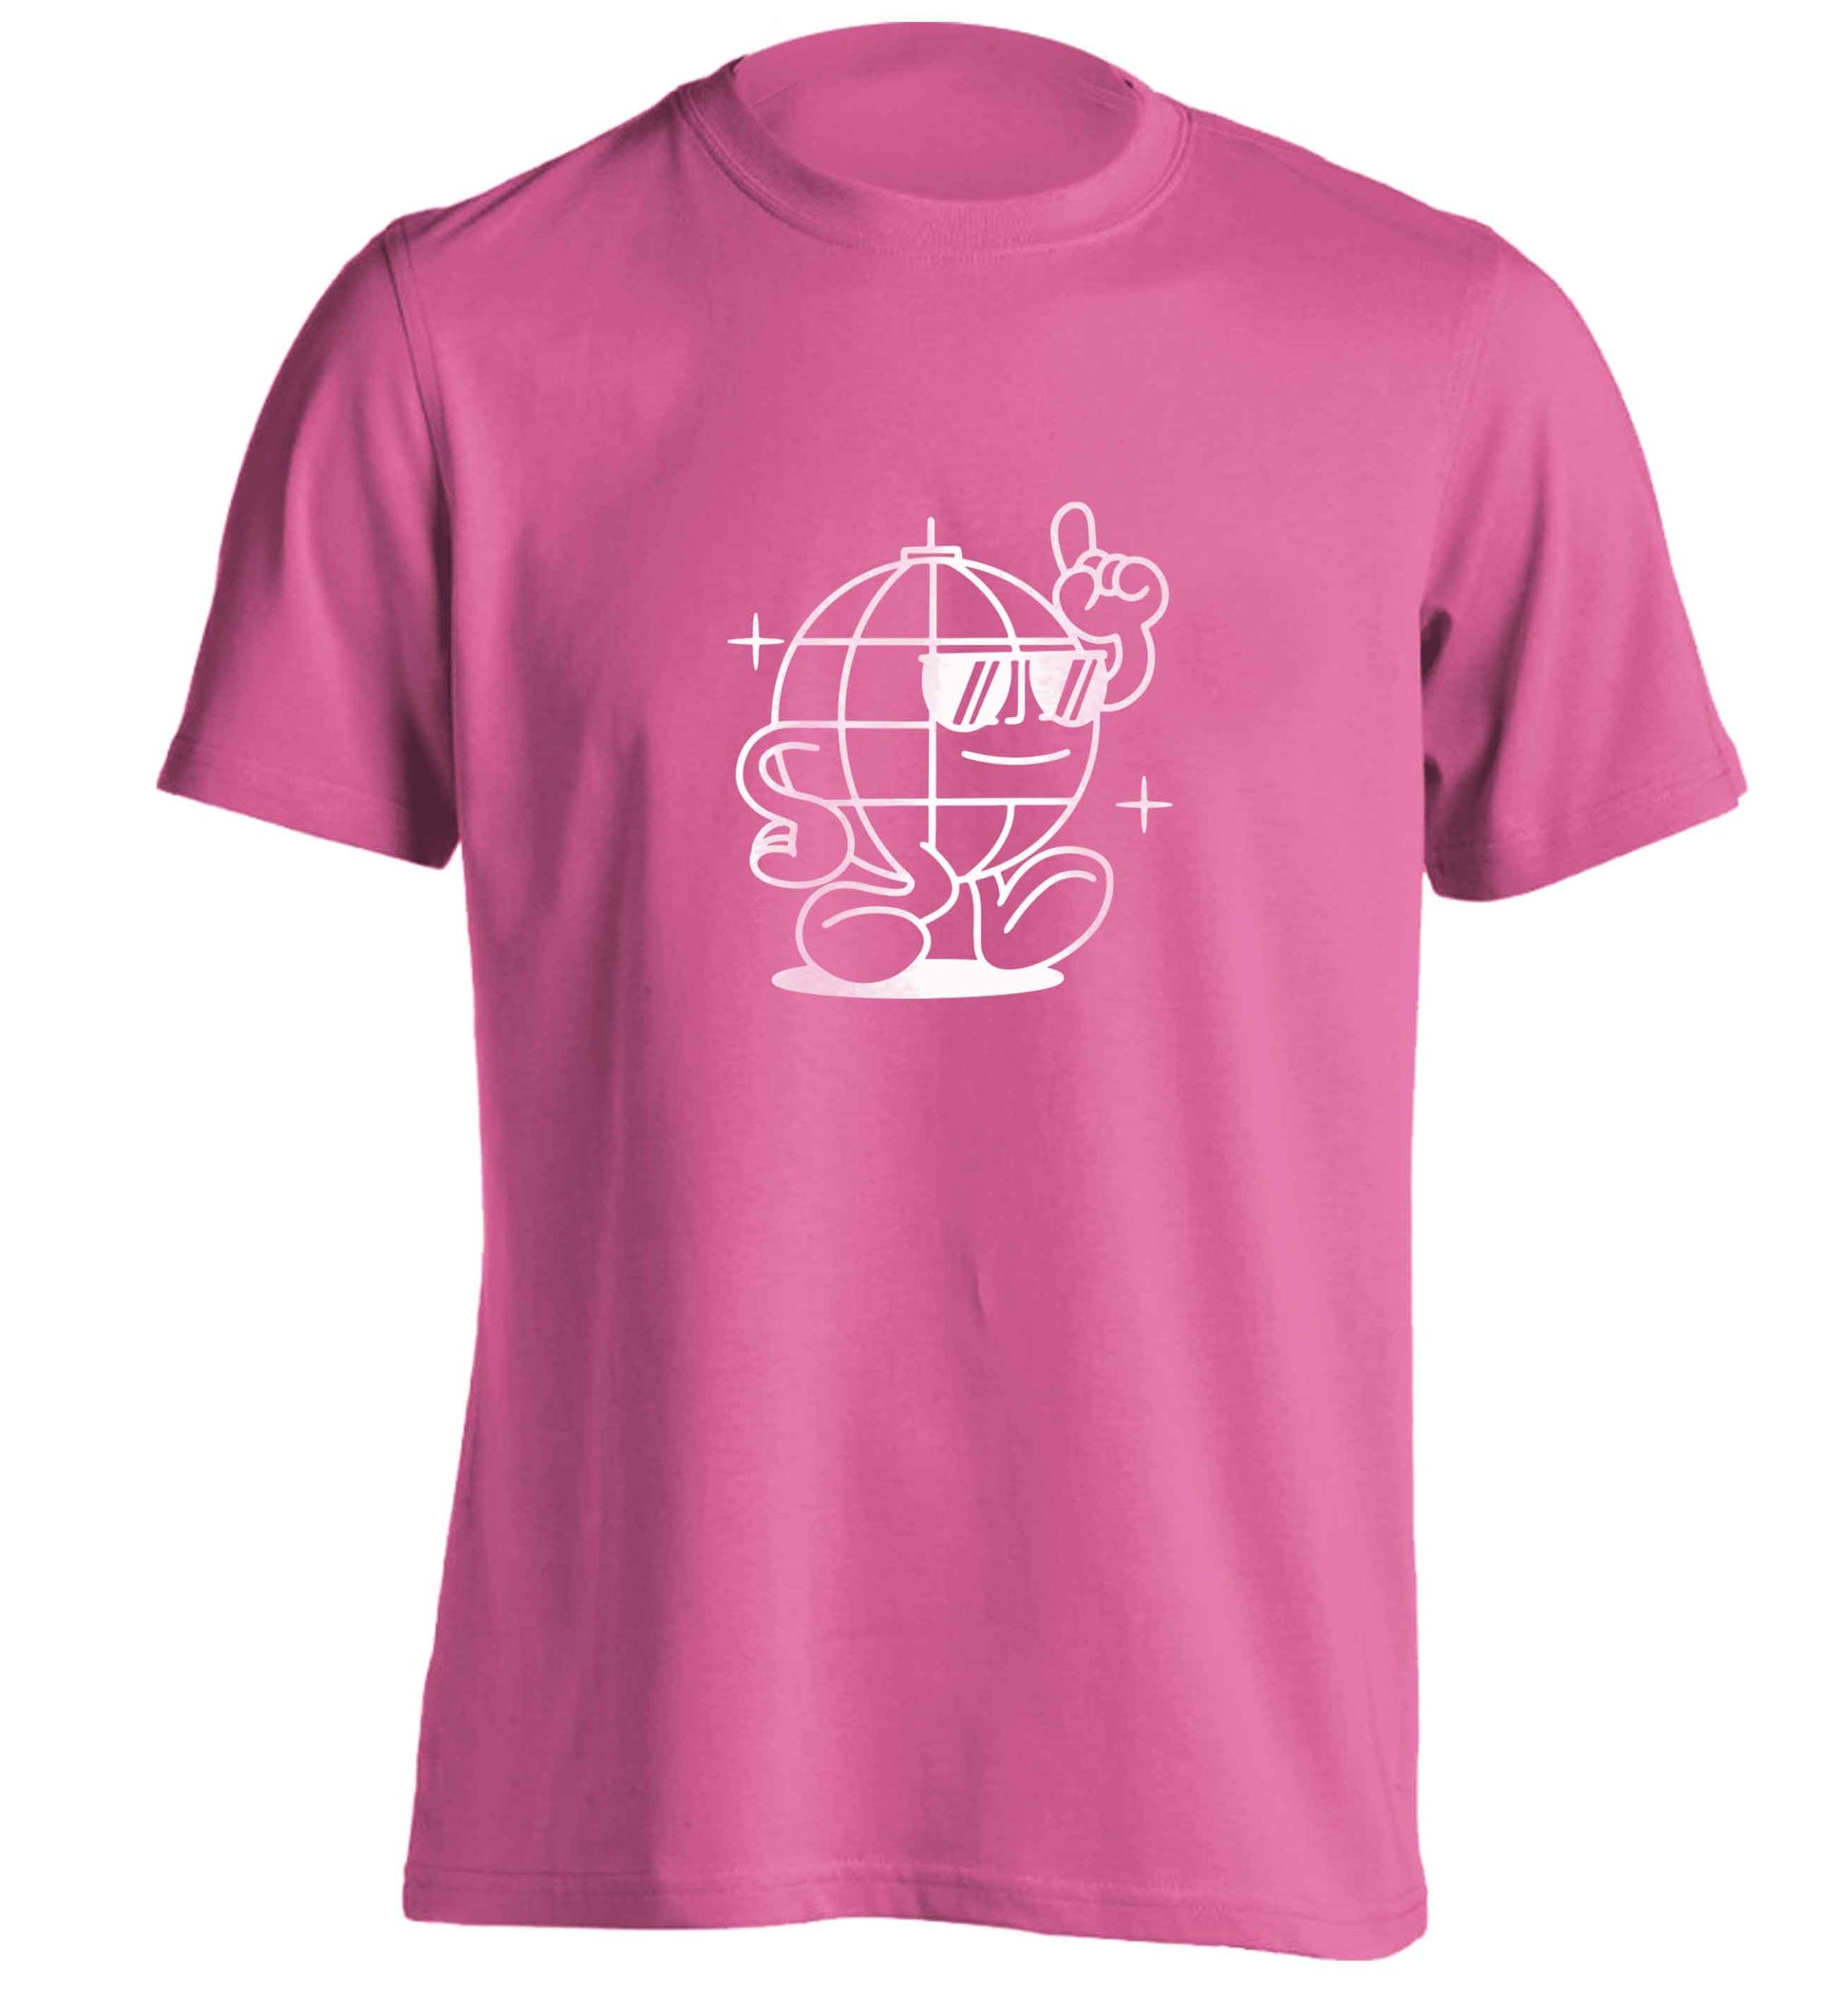 Disco ball adults unisex pink Tshirt 2XL